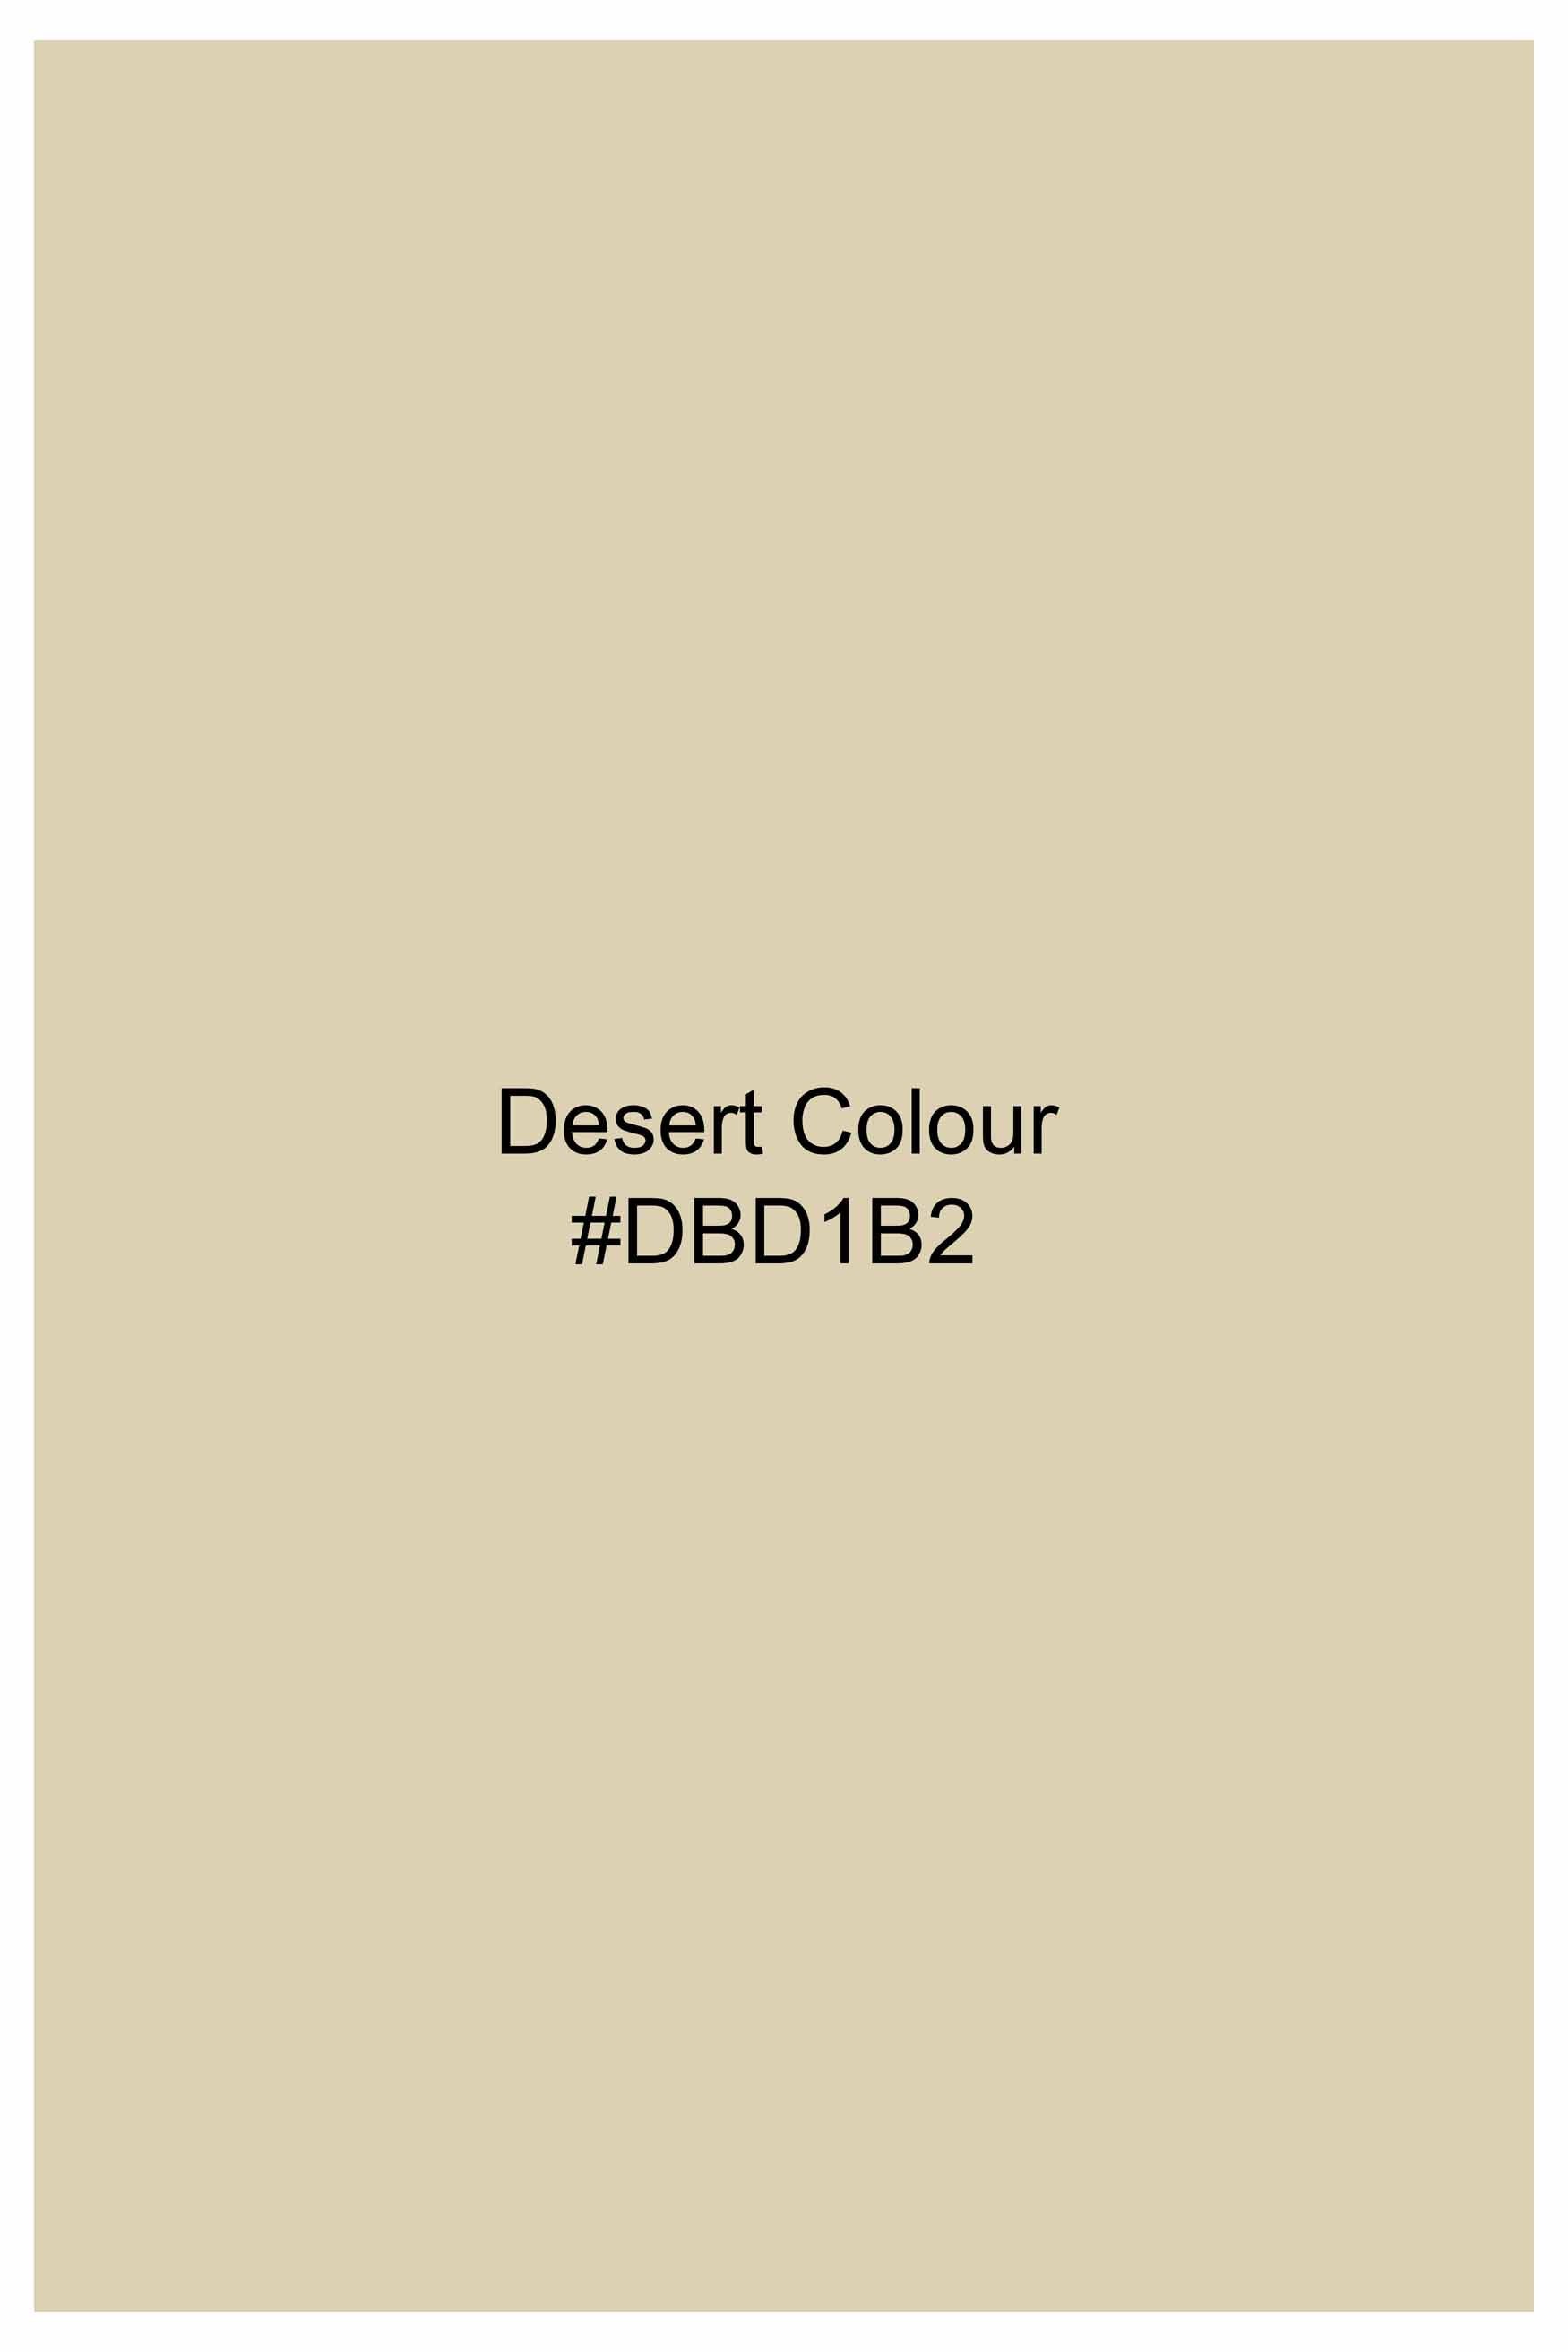 Desert Brown Dobby Textured Premium Giza Cotton Shirt 11452-BD-38, 11452-BD-H-38, 11452-BD-39, 11452-BD-H-39, 11452-BD-40, 11452-BD-H-40, 11452-BD-42, 11452-BD-H-42, 11452-BD-44, 11452-BD-H-44, 11452-BD-46, 11452-BD-H-46, 11452-BD-48, 11452-BD-H-48, 11452-BD-50, 11452-BD-H-50, 11452-BD-52, 11452-BD-H-52